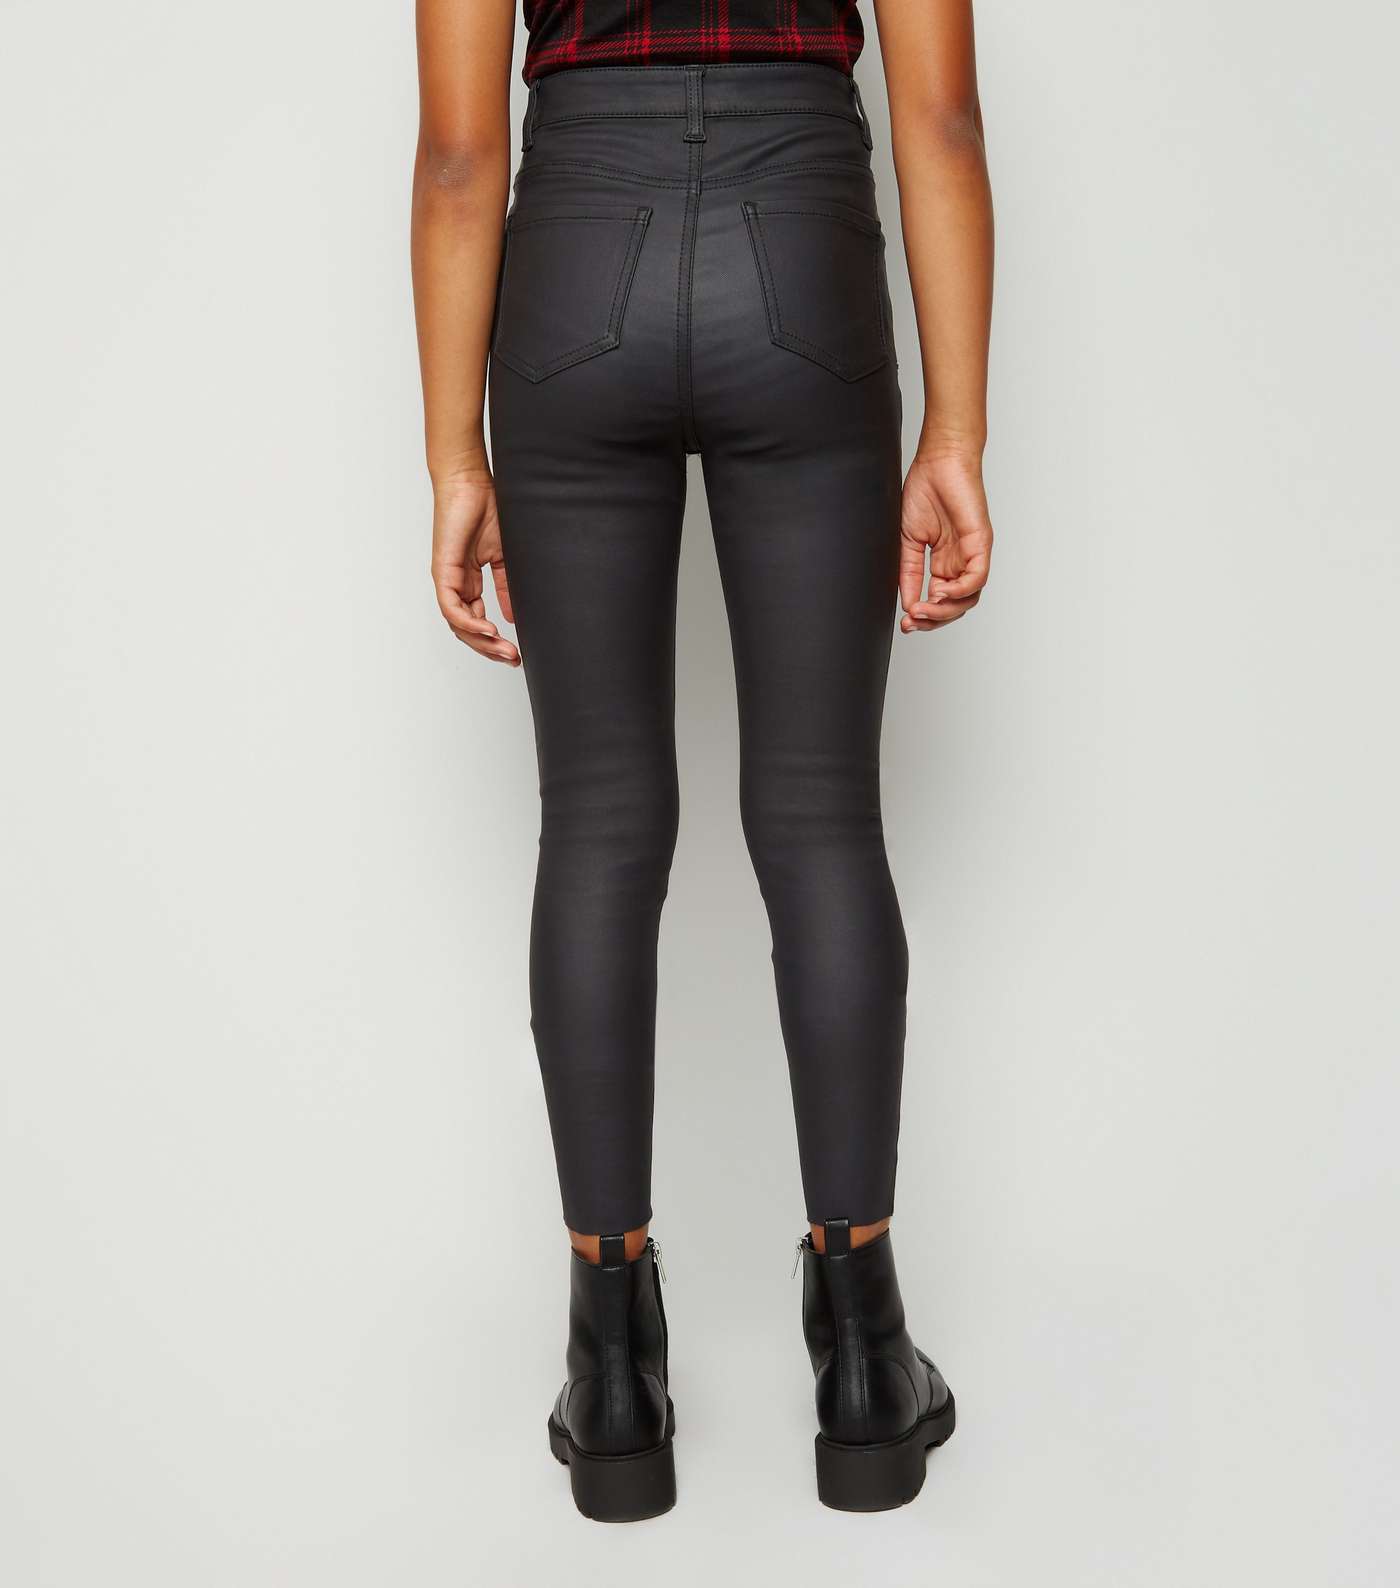 Girls Black Leather-Look High Waist Skinny Jeans Image 5